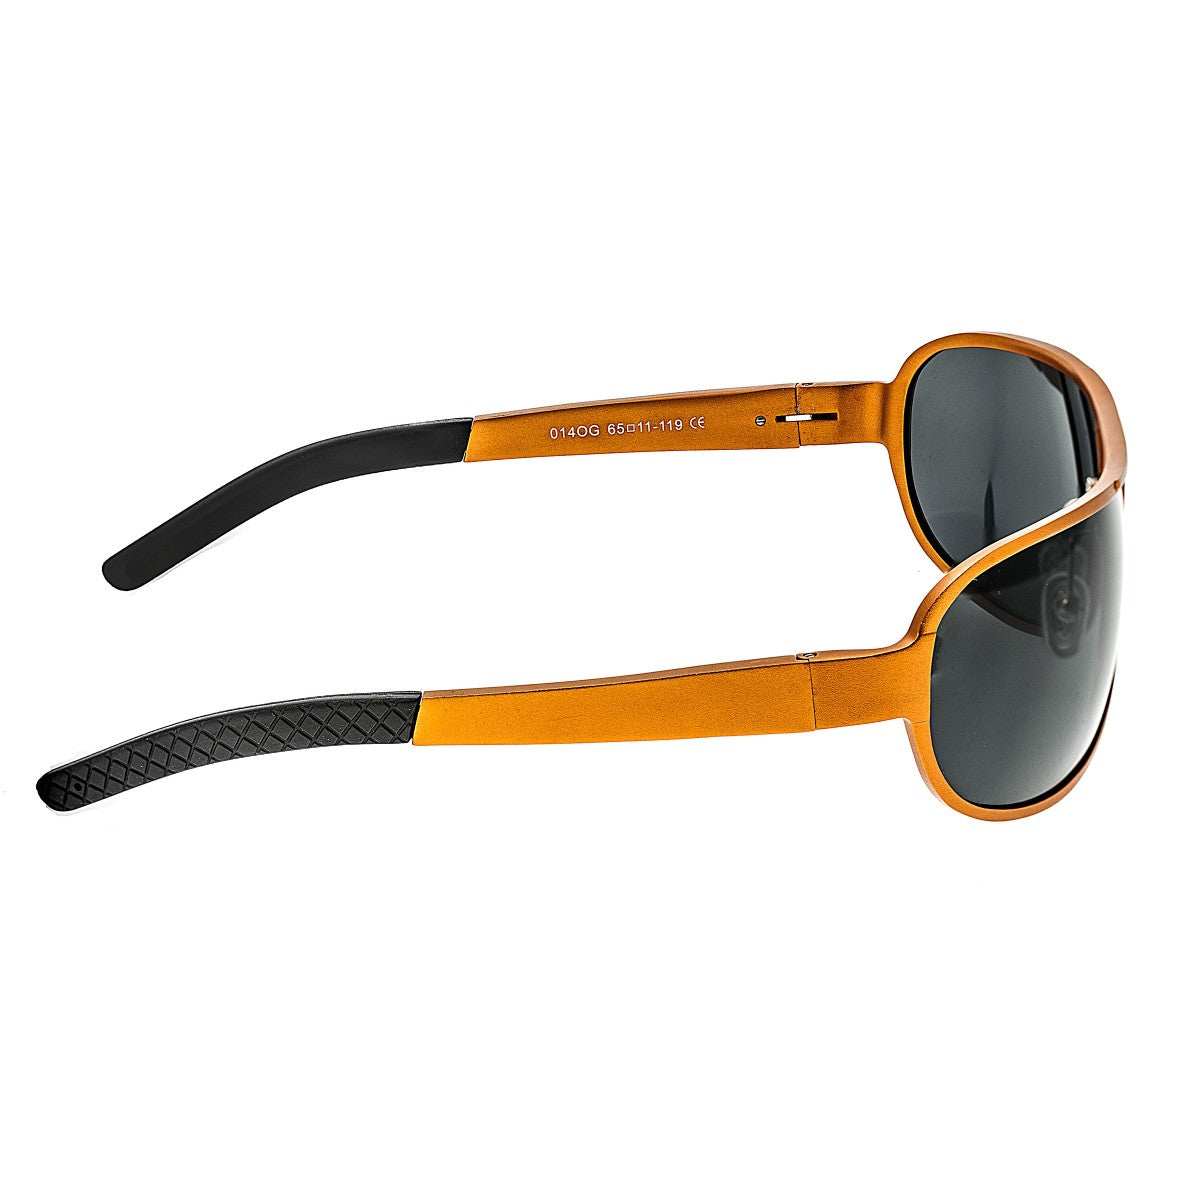 Breed Xander Aluminium Polarized Sunglasses - Orange/Black - BSG014OG